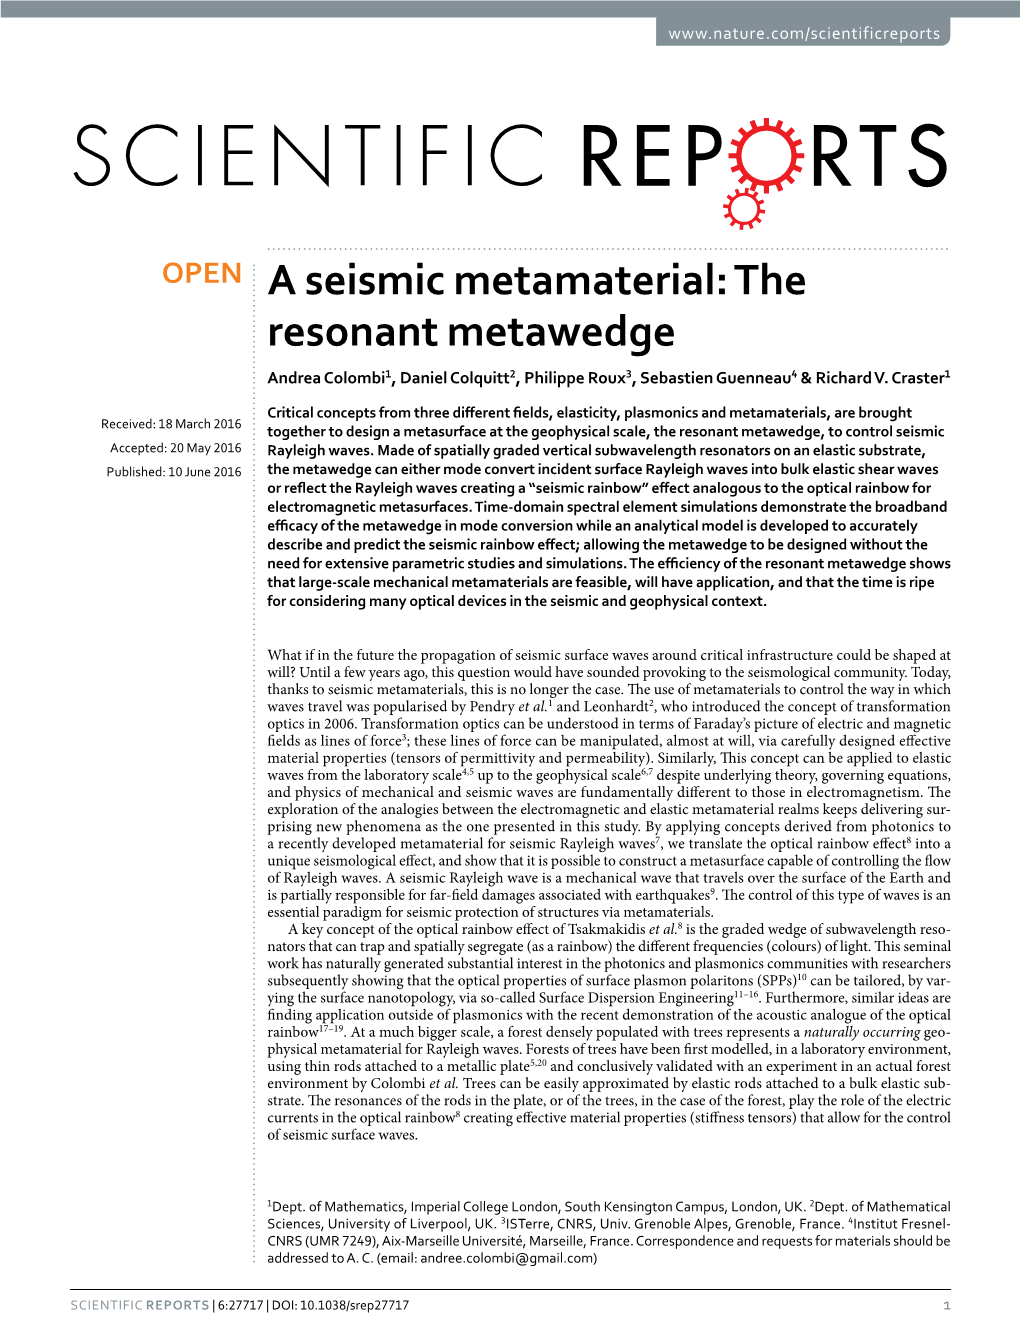 A Seismic Metamaterial: the Resonant Metawedge Andrea Colombi1, Daniel Colquitt2, Philippe Roux3, Sebastien Guenneau4 & Richard V